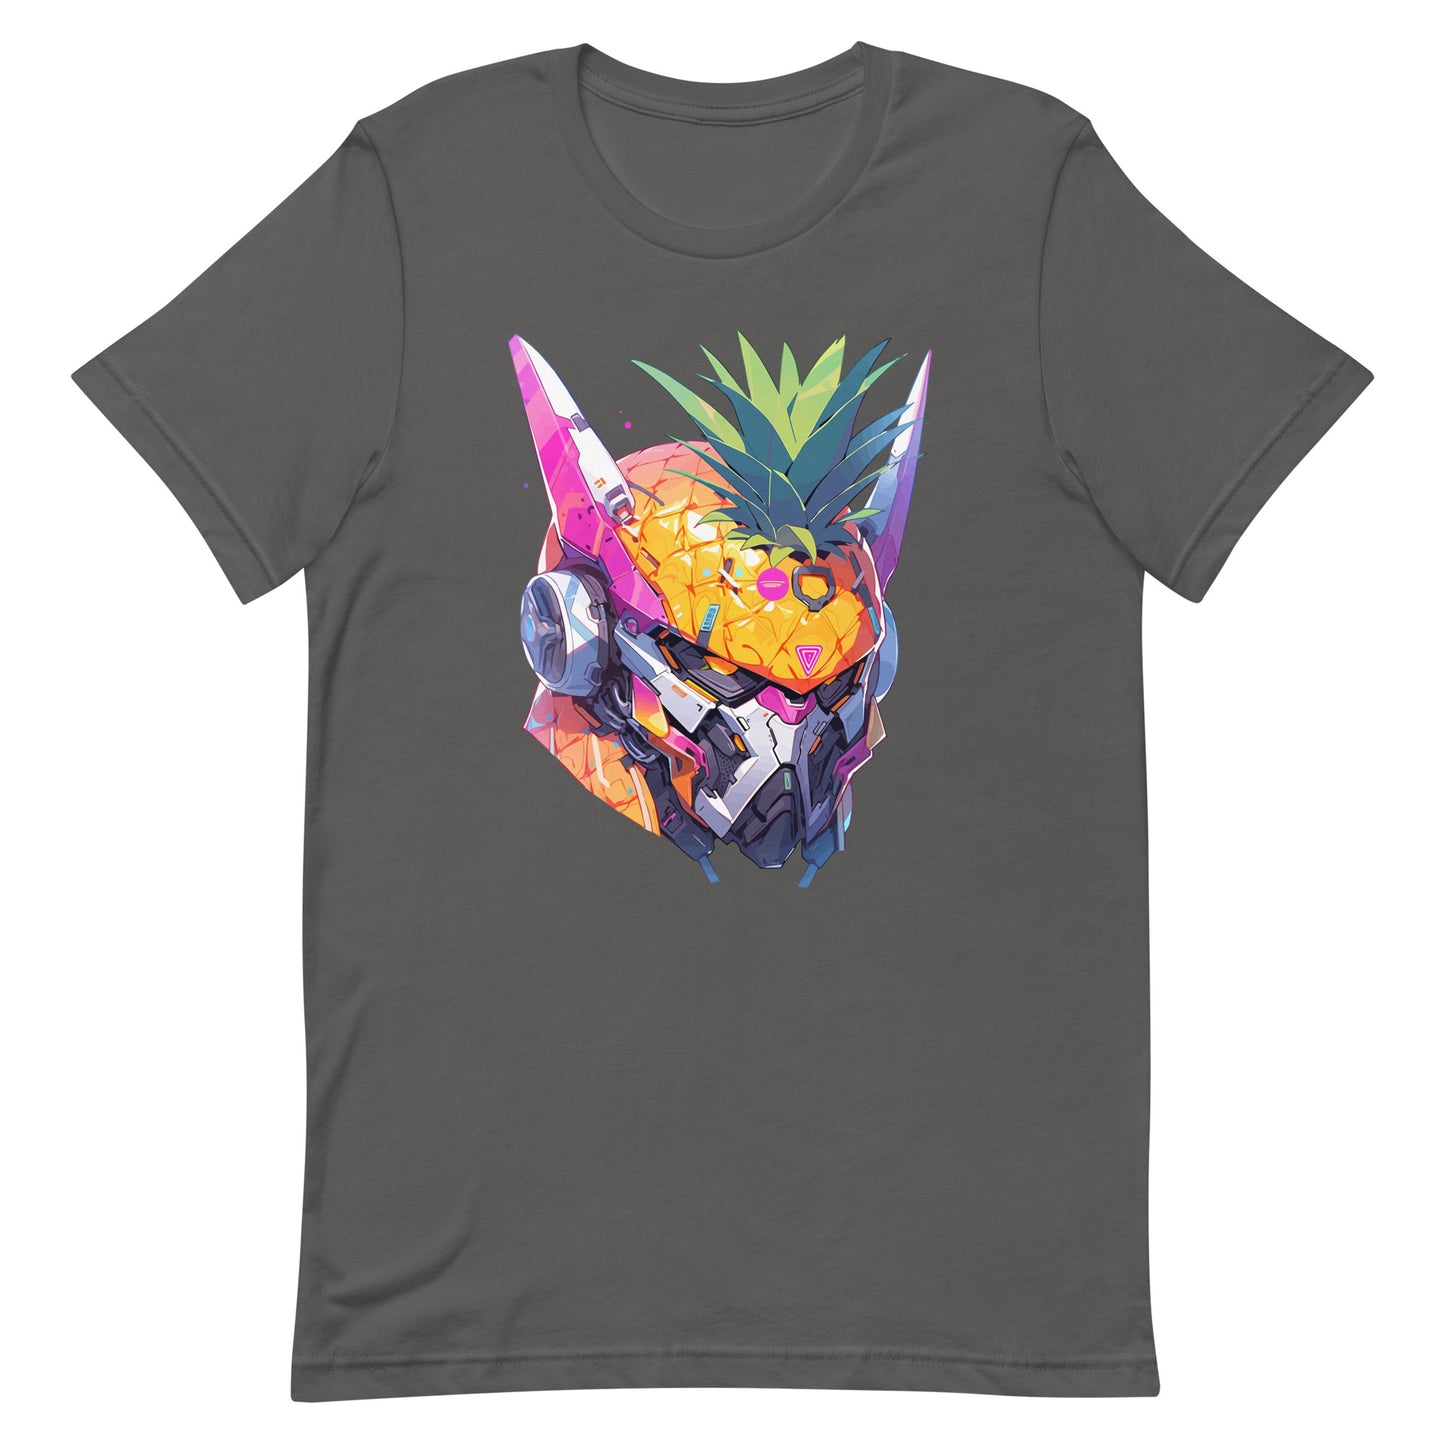 Cyber pineapple, Fantastic fruit robot head, Pop Art fantasy mutant - Unisex t-shirt